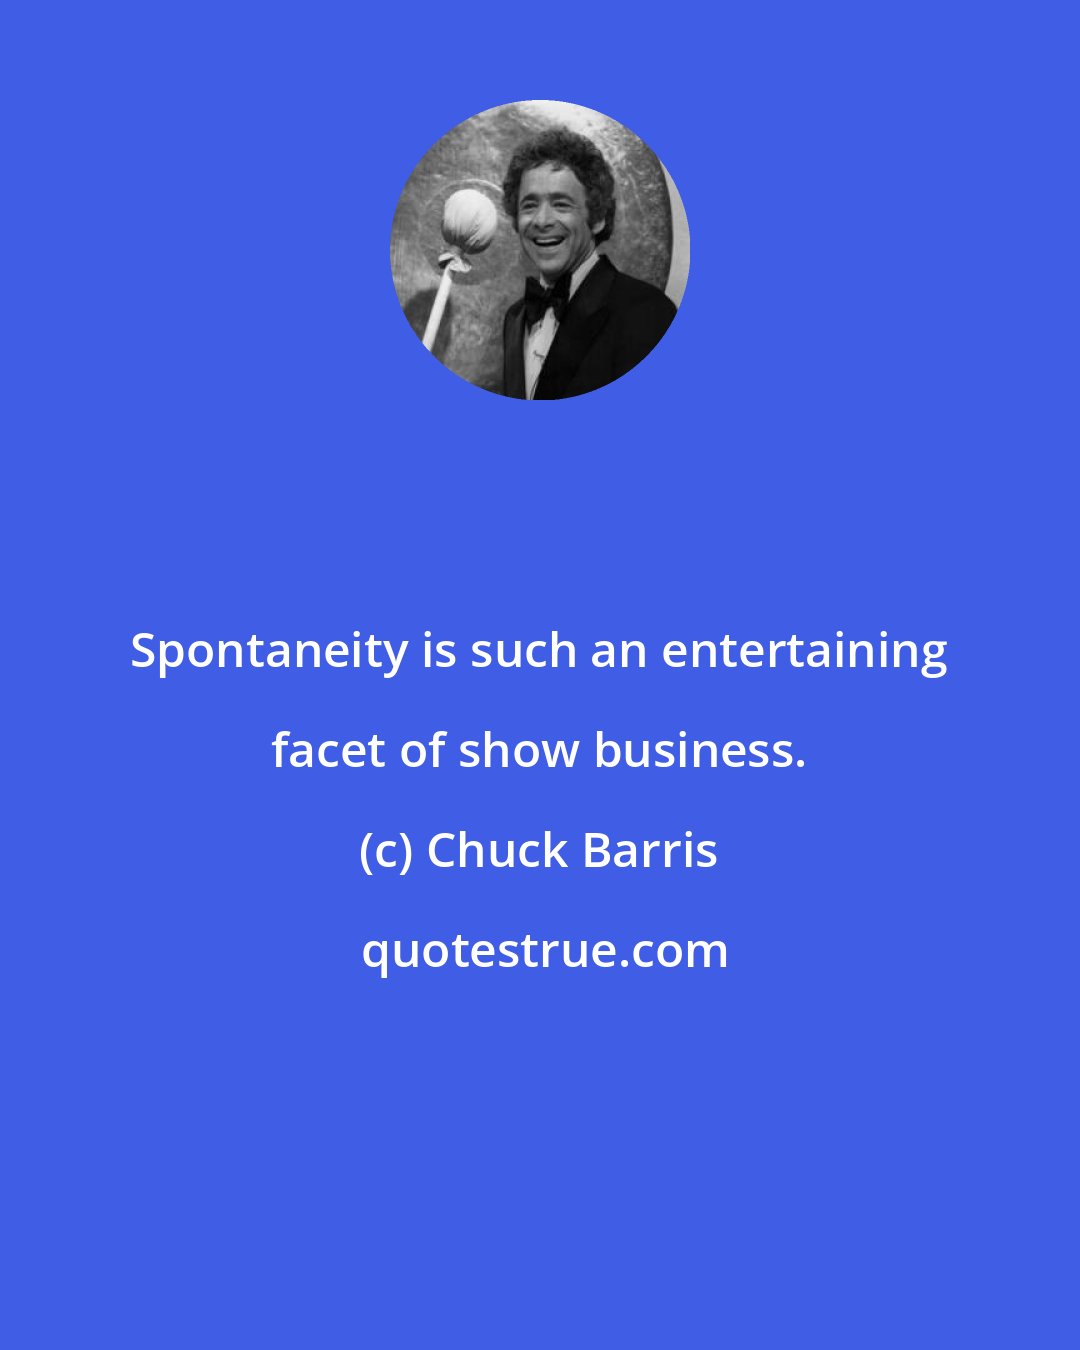 Chuck Barris: Spontaneity is such an entertaining facet of show business.